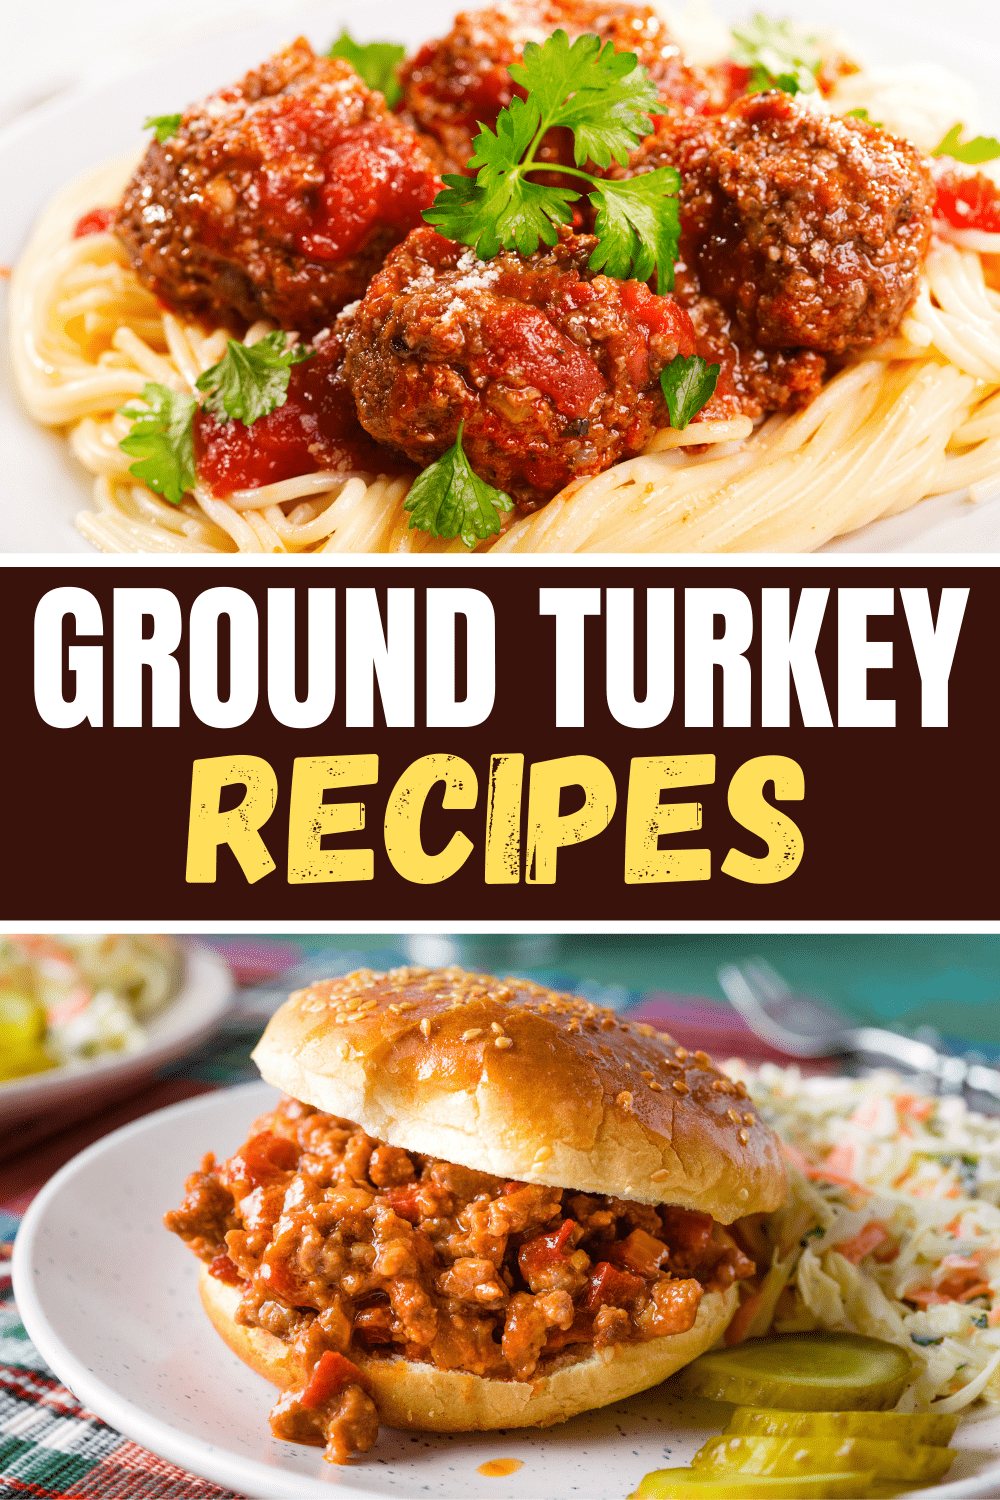 Ground Turkey Recipes 1 